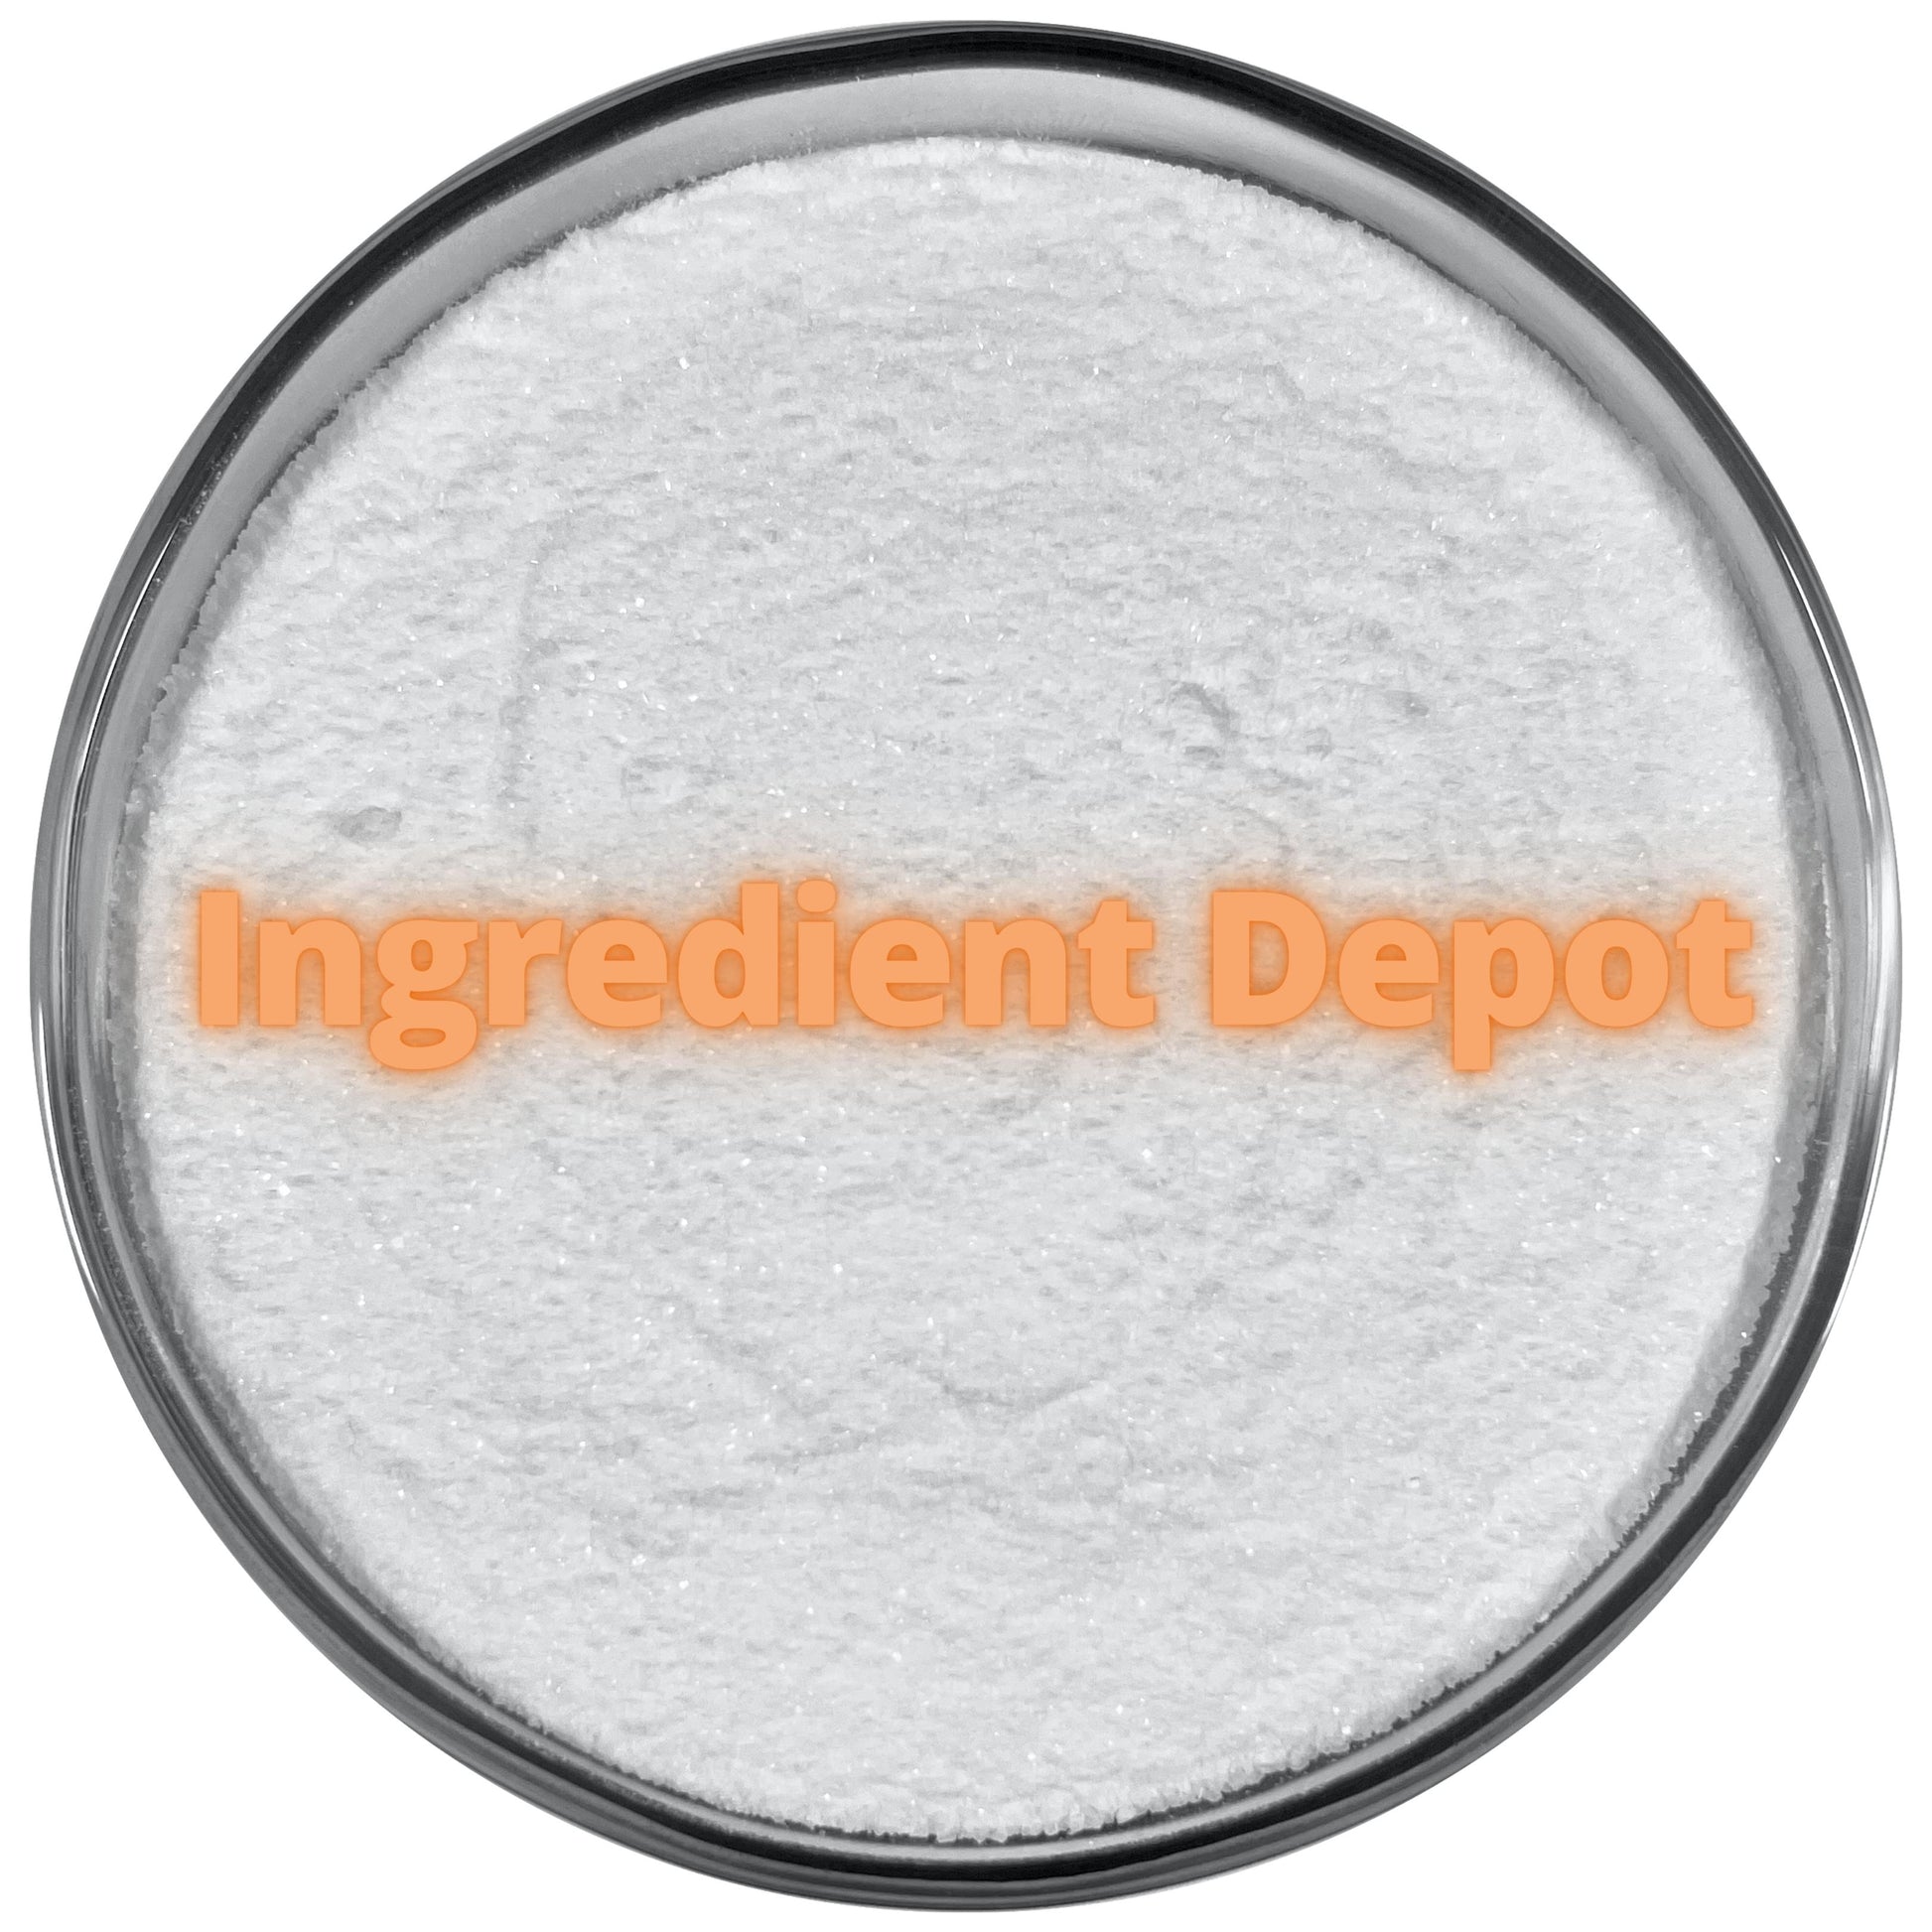 Ascorbic Acid (Vitamin C), Food and USP Grade 4 kgs - IngredientDepot.com